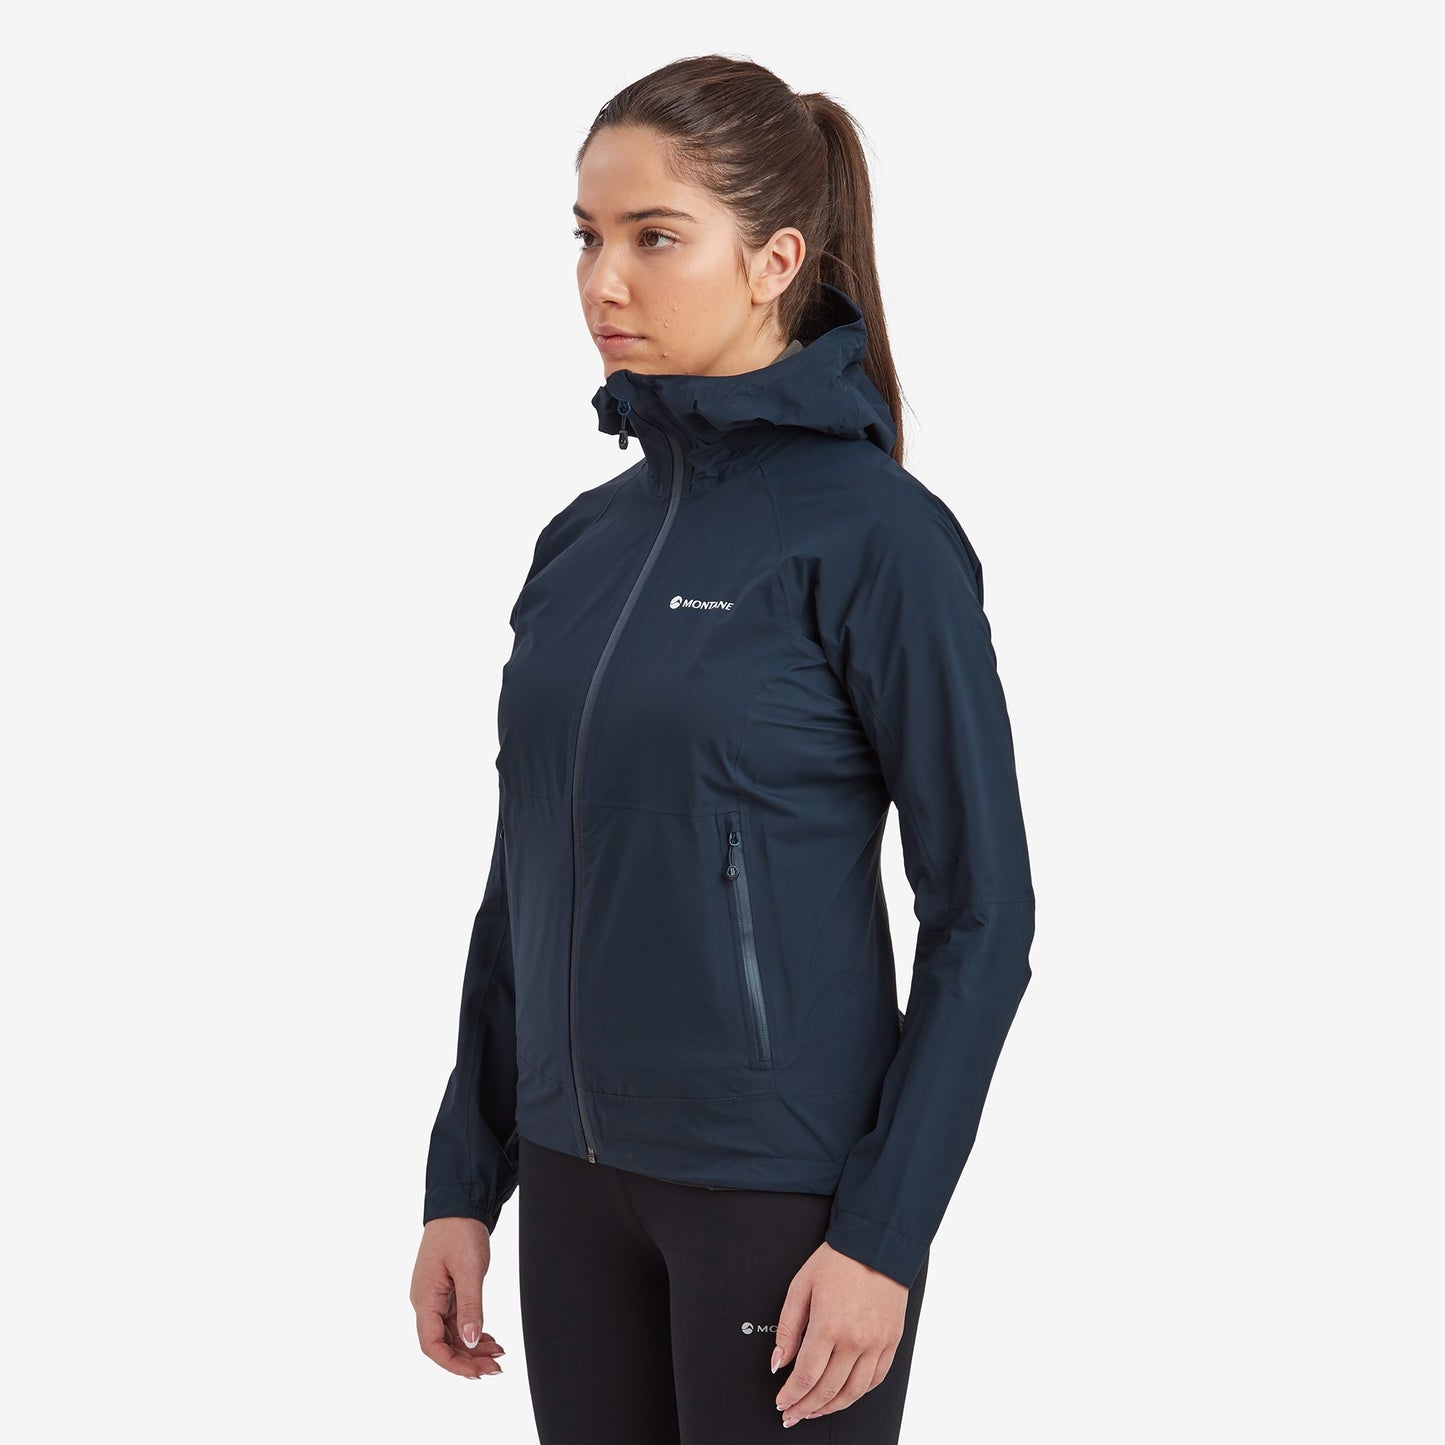 Montane Women's Minimus Lite Waterproof Jacket A lightweight waterproof jacket for running